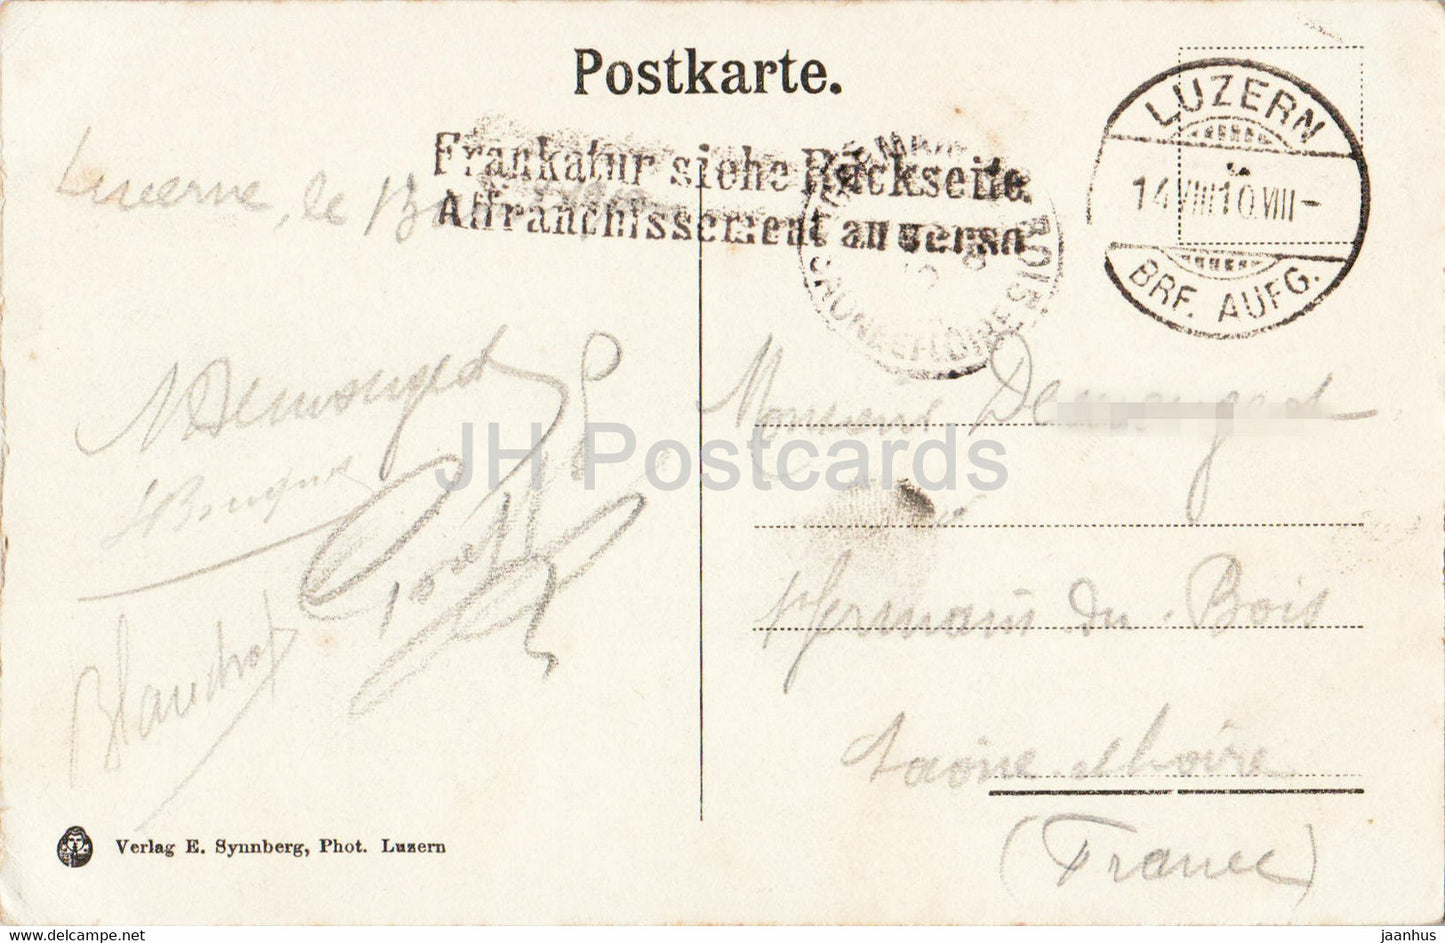 Luzern - Lucerne - Schweizerhofquai - 619 - tram - bateau - bateau à vapeur - navire - carte postale ancienne - 1910 - Suisse - utilisé